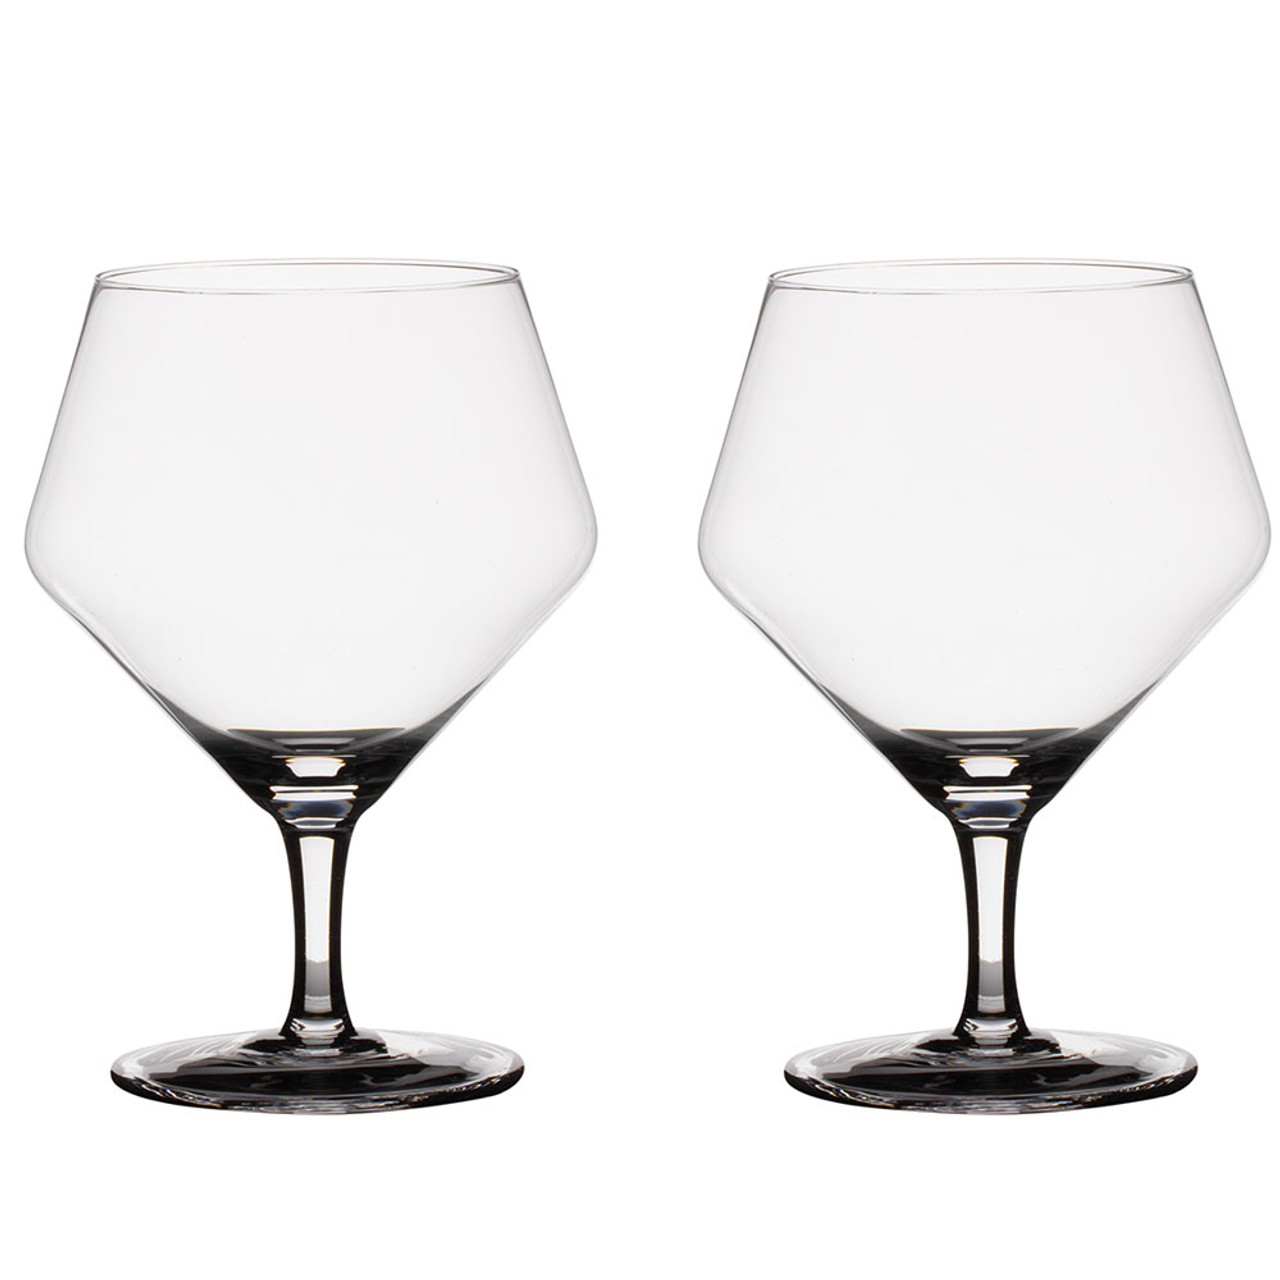 Angled Crystal Gin & Tonic Glasses by Viski - 5.8307087 x 4.33071 - Bed  Bath & Beyond - 32683192